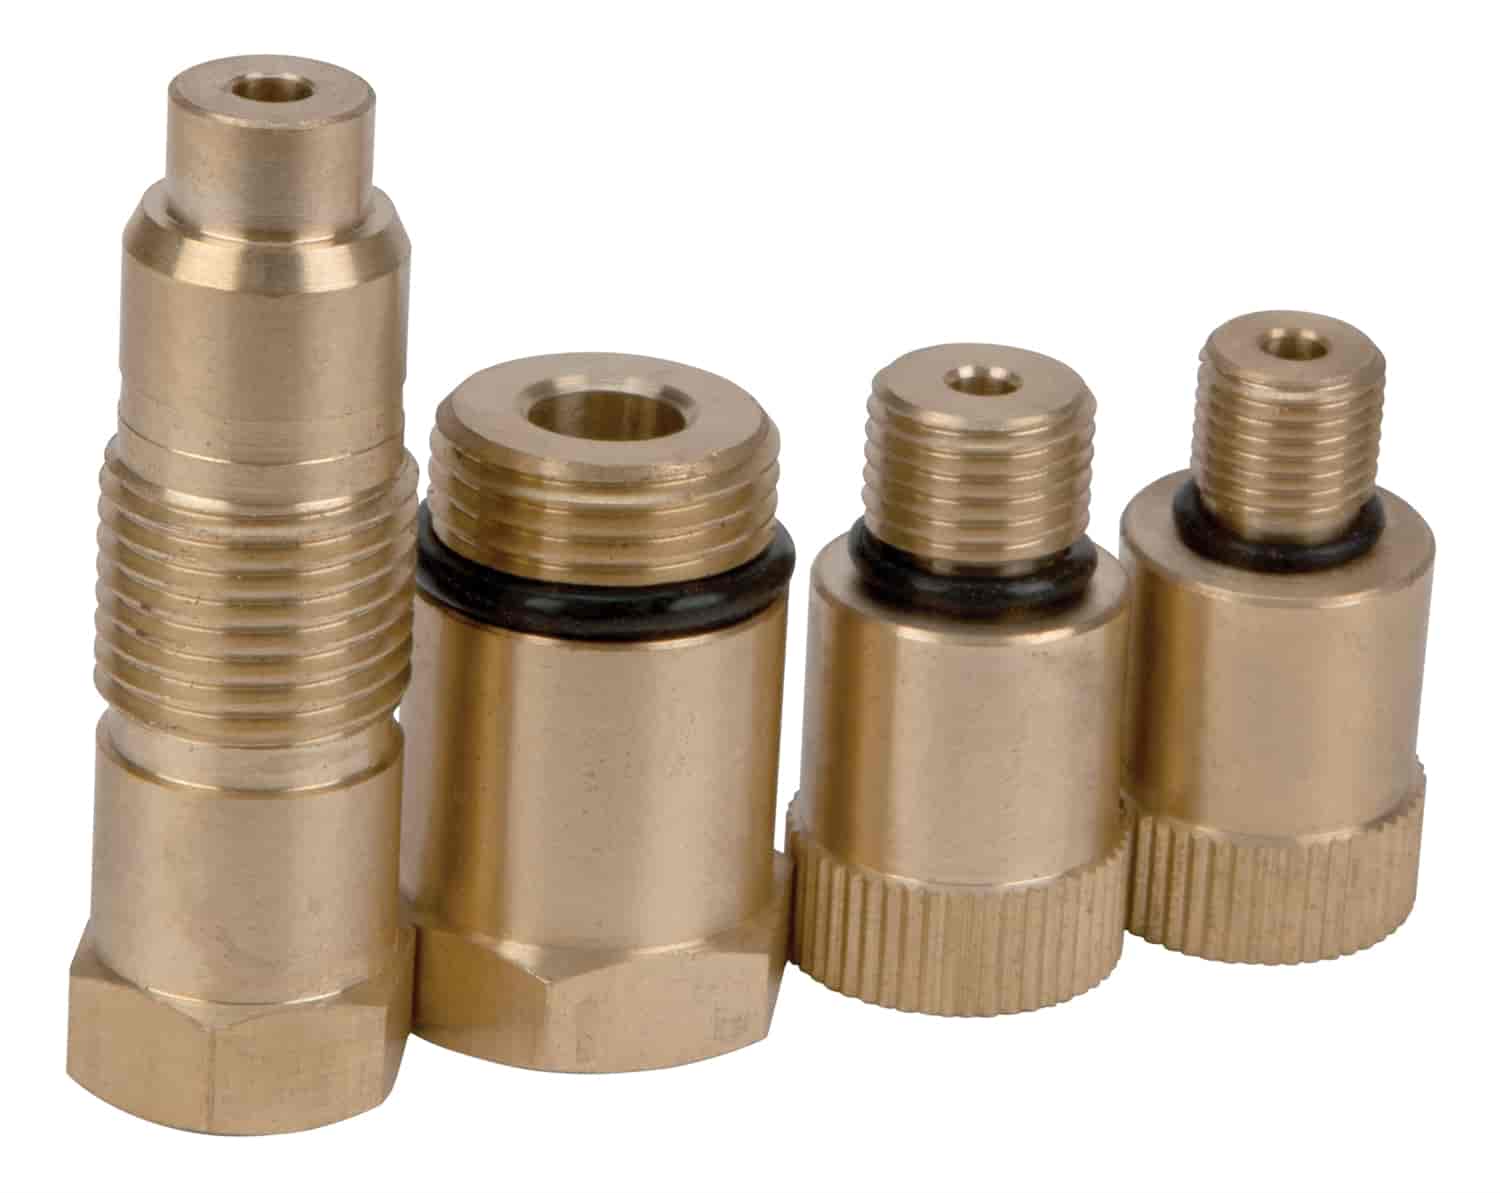 Compression Tester Spark Plug Hole Adapters [Set of 4]